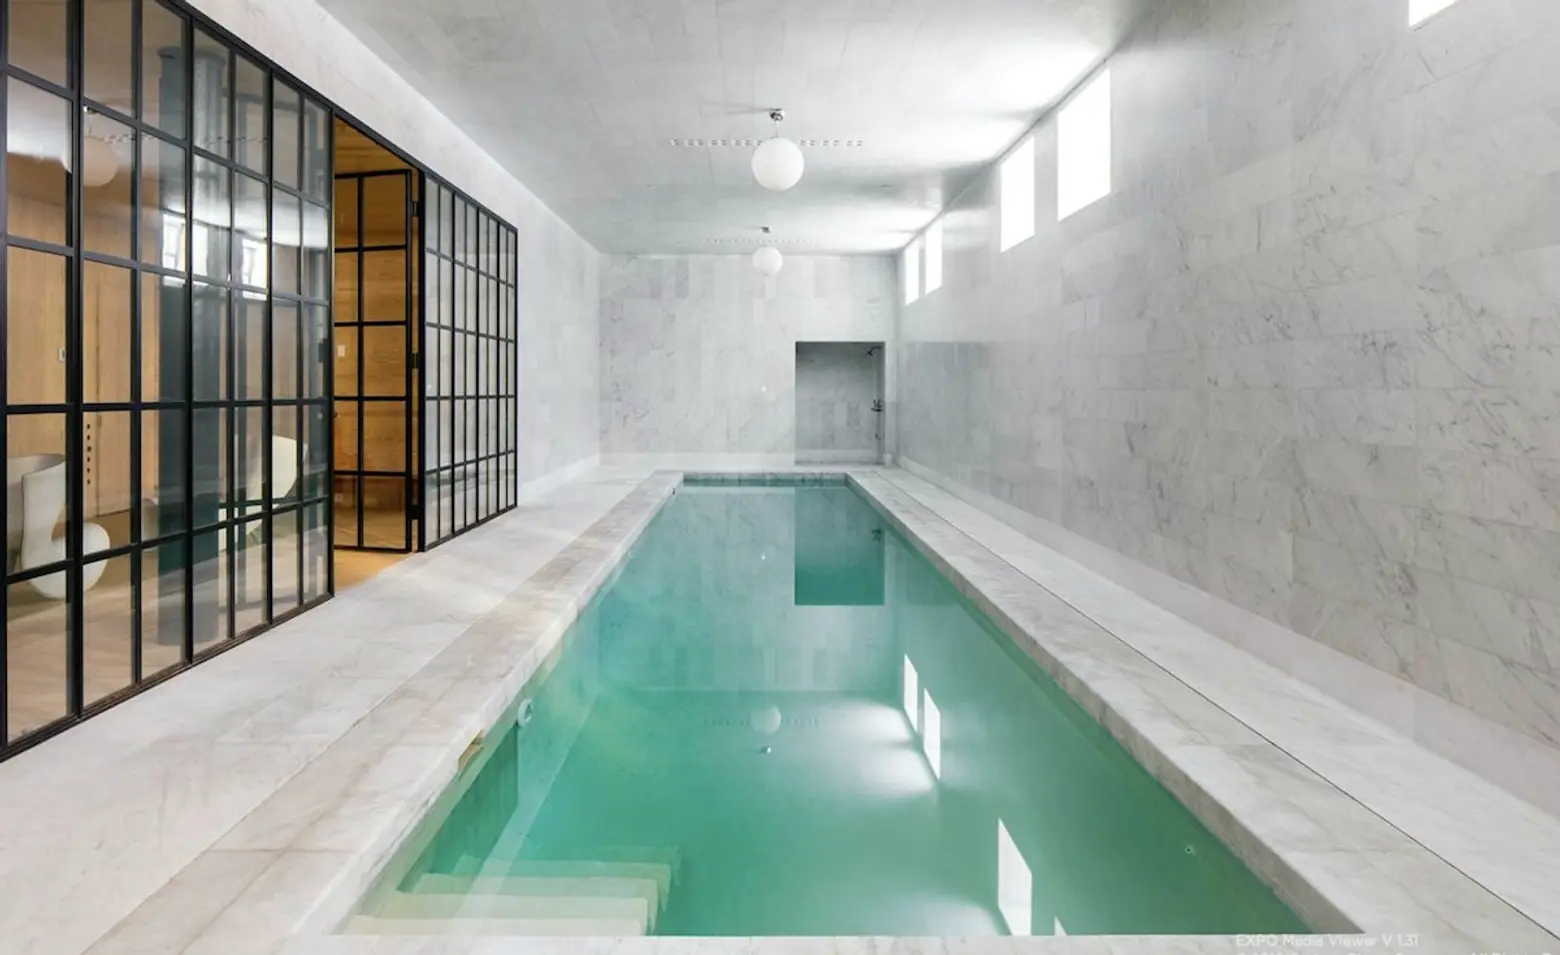 60 Collister Street, Marble House, designer Stuart Parr, 44-foot long indoor lap pool